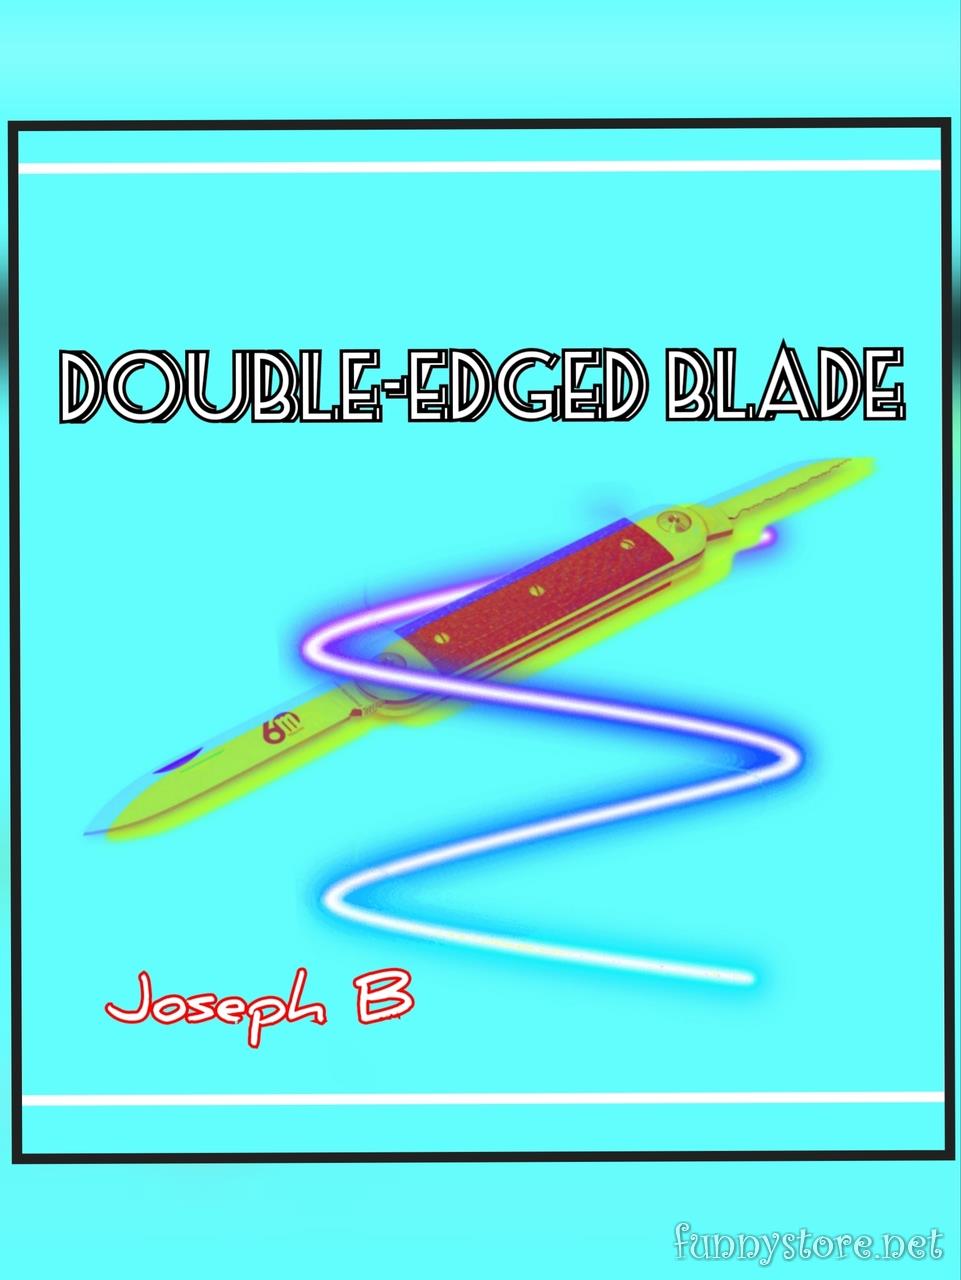 Joseph B - Double-edged blade